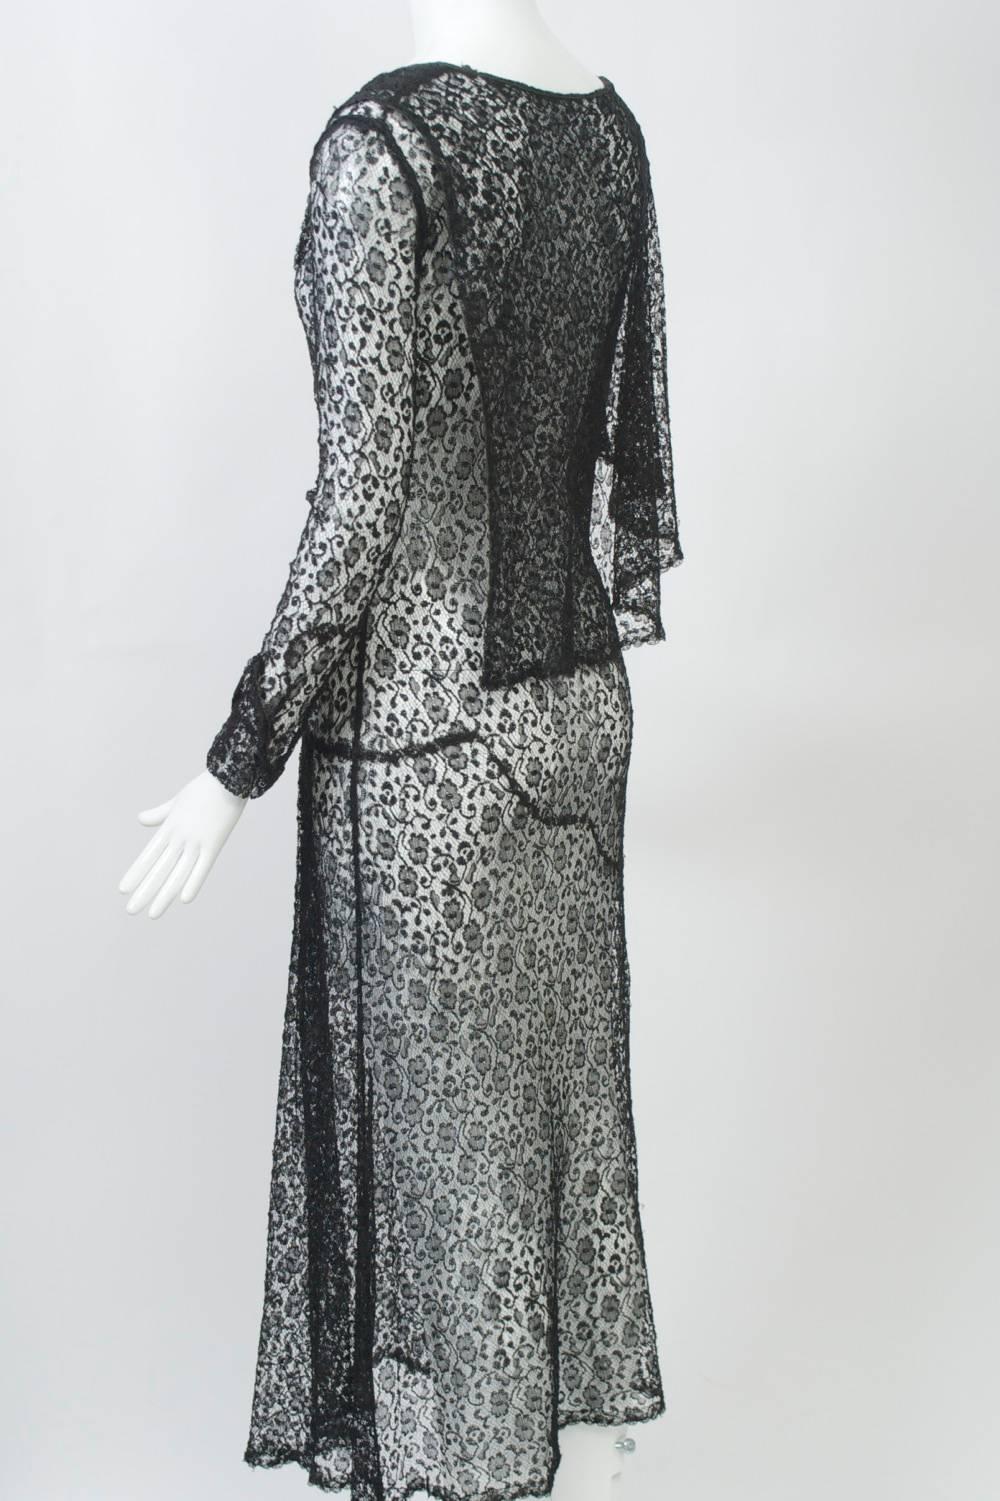 1930 tea dress